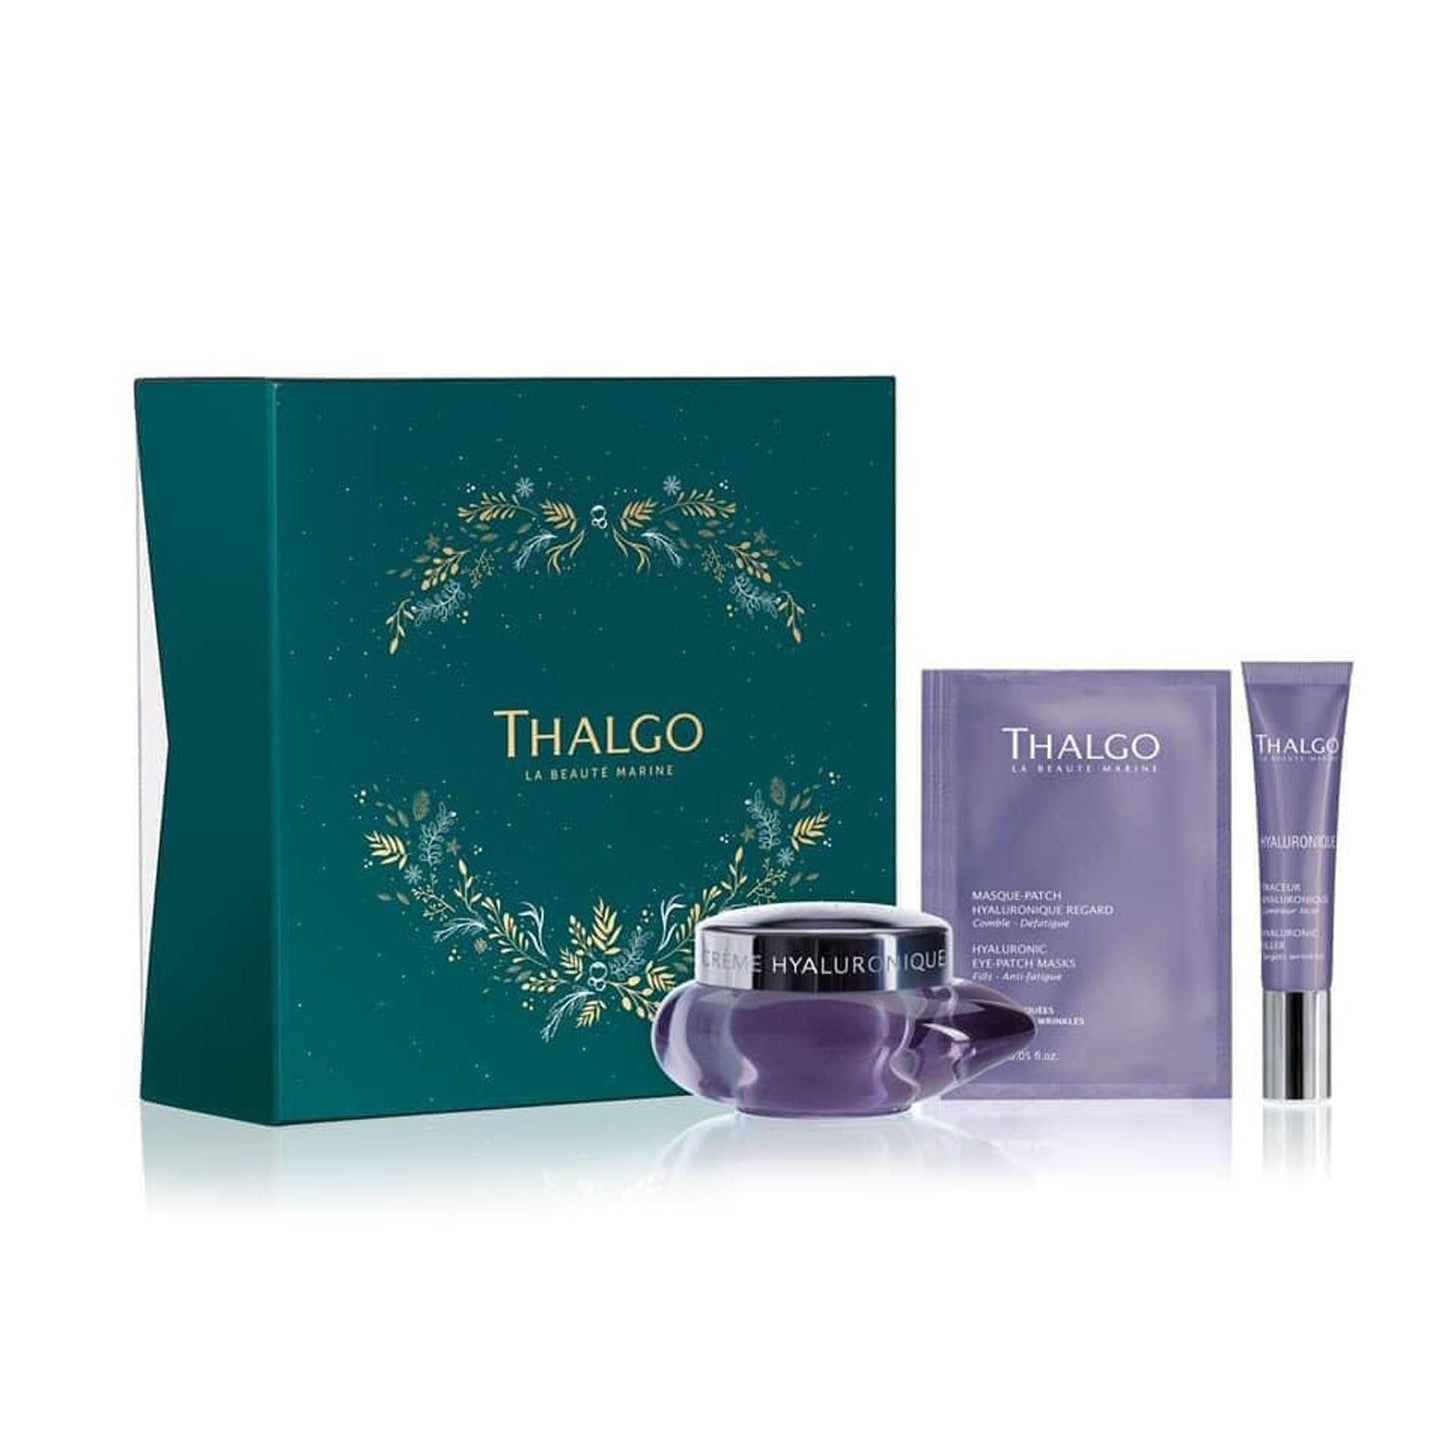 Thalgo - Hyaluronique Creme Gift Set